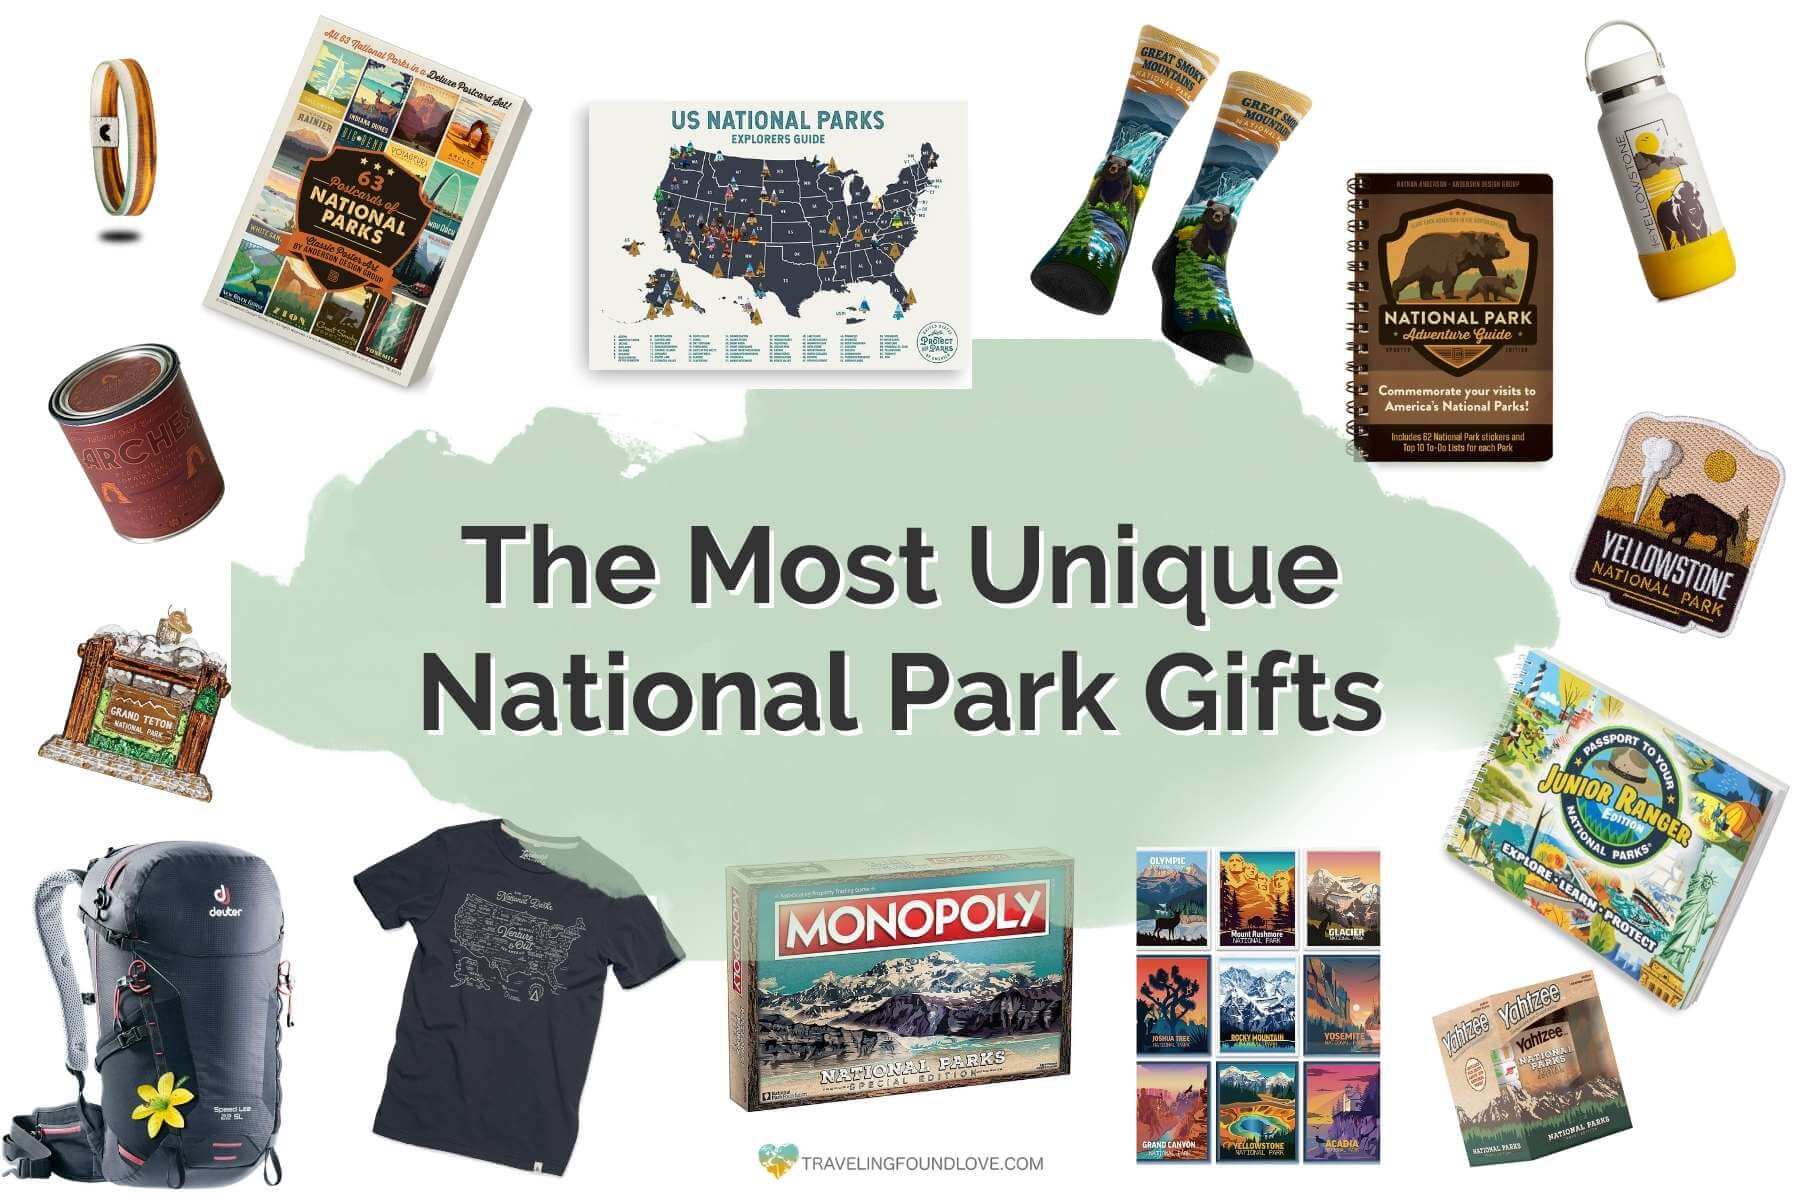 https://www.travelingfoundlove.com/wp-content/uploads/2022/08/Most-Unique-National-Park-Gifts-1.jpg